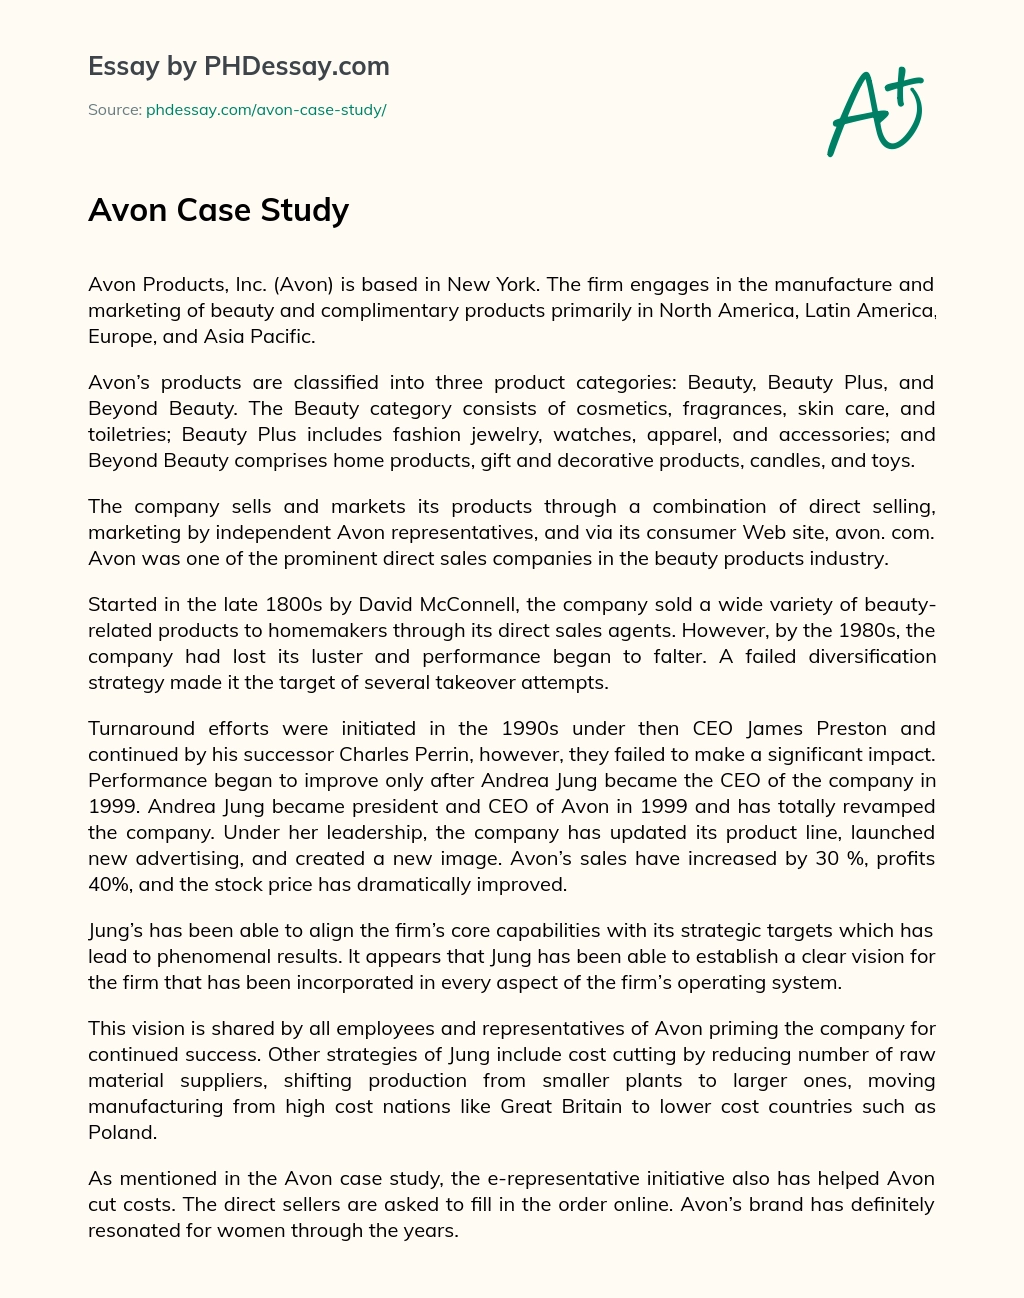 avon case study analysis essay